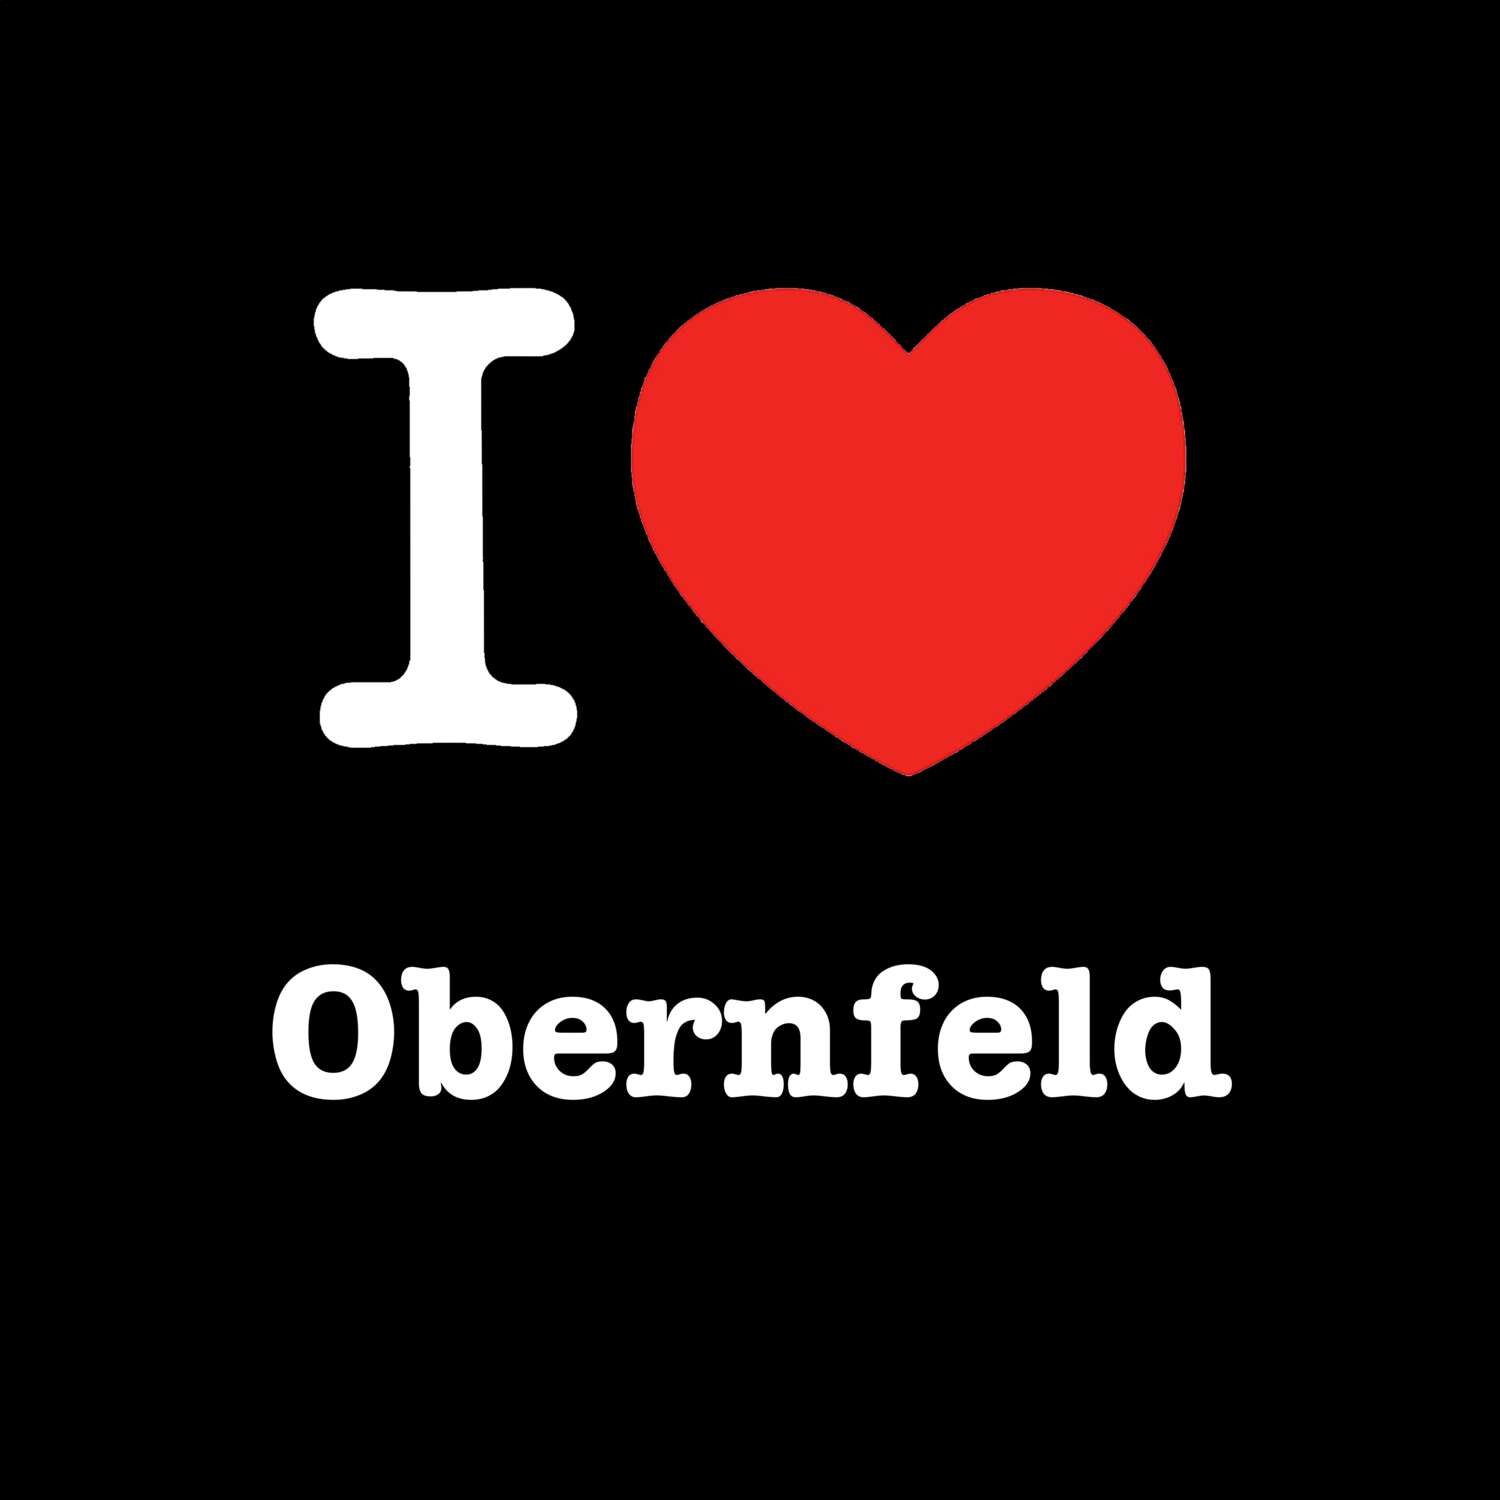 Obernfeld T-Shirt »I love«